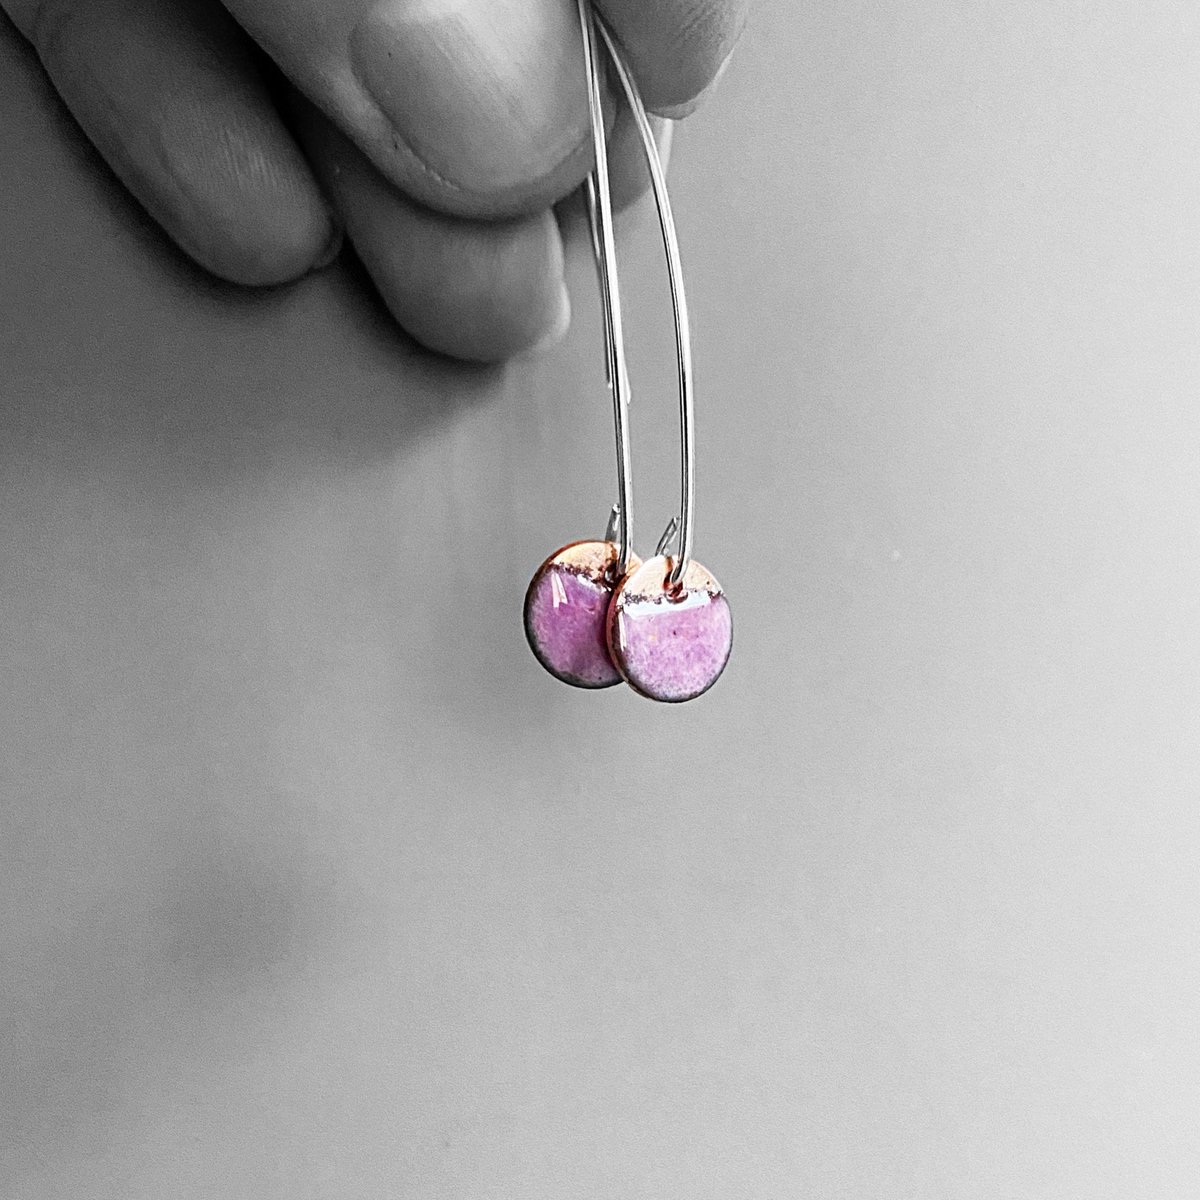 Raspberry Pink Enamel Disc Earrings , Cute Geometric Drop Earrings tuppu.net/5fd54cb3 ##UKGiftHour #HandmadeHour #giftideas #bizbubble #inbizhour #shopsmall #UKHashtags #MHHSBD #DiscEarrings